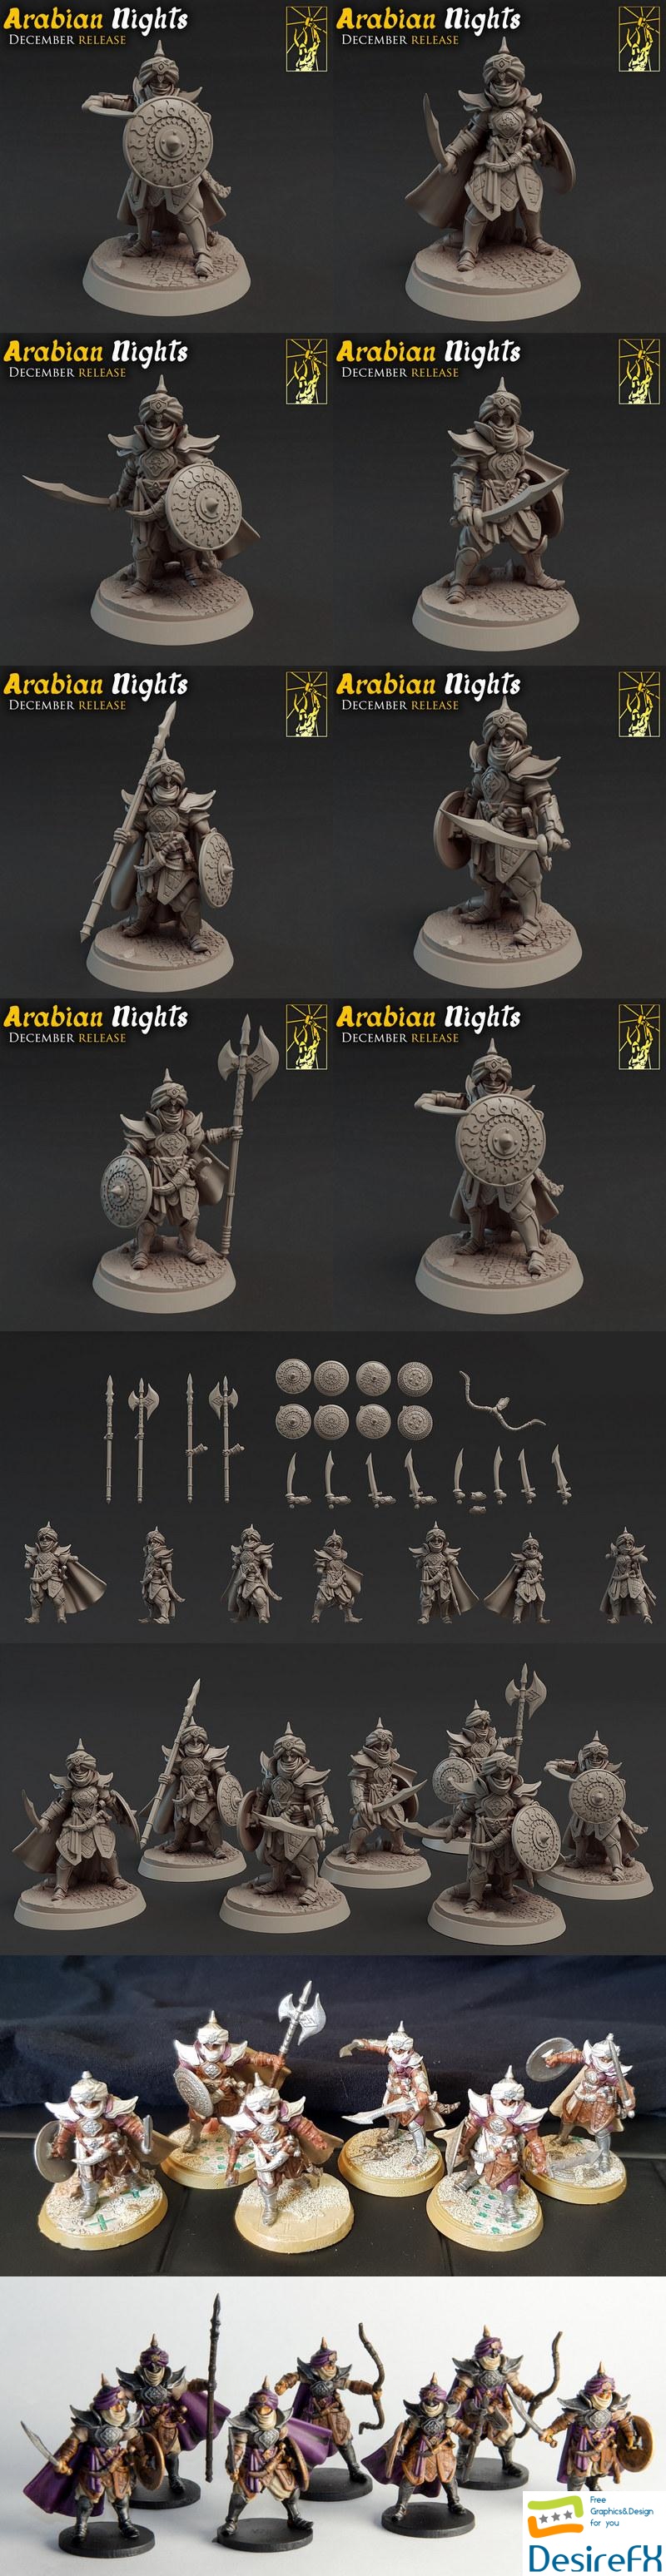 Arabian Nights Modular Warriors - 3D Print